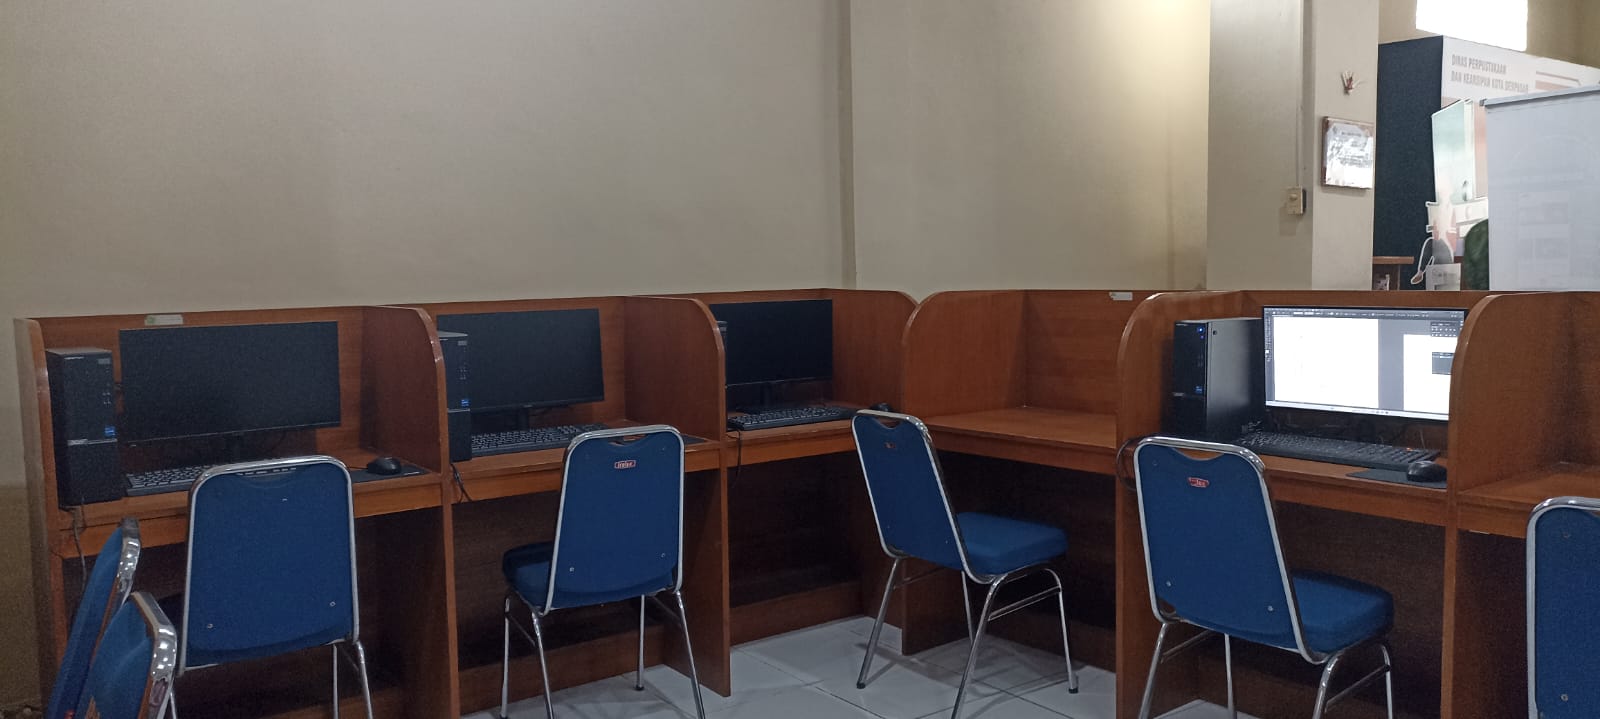 Area Komputer Perpustakaan Kota DenpasarSumber: Pribadi